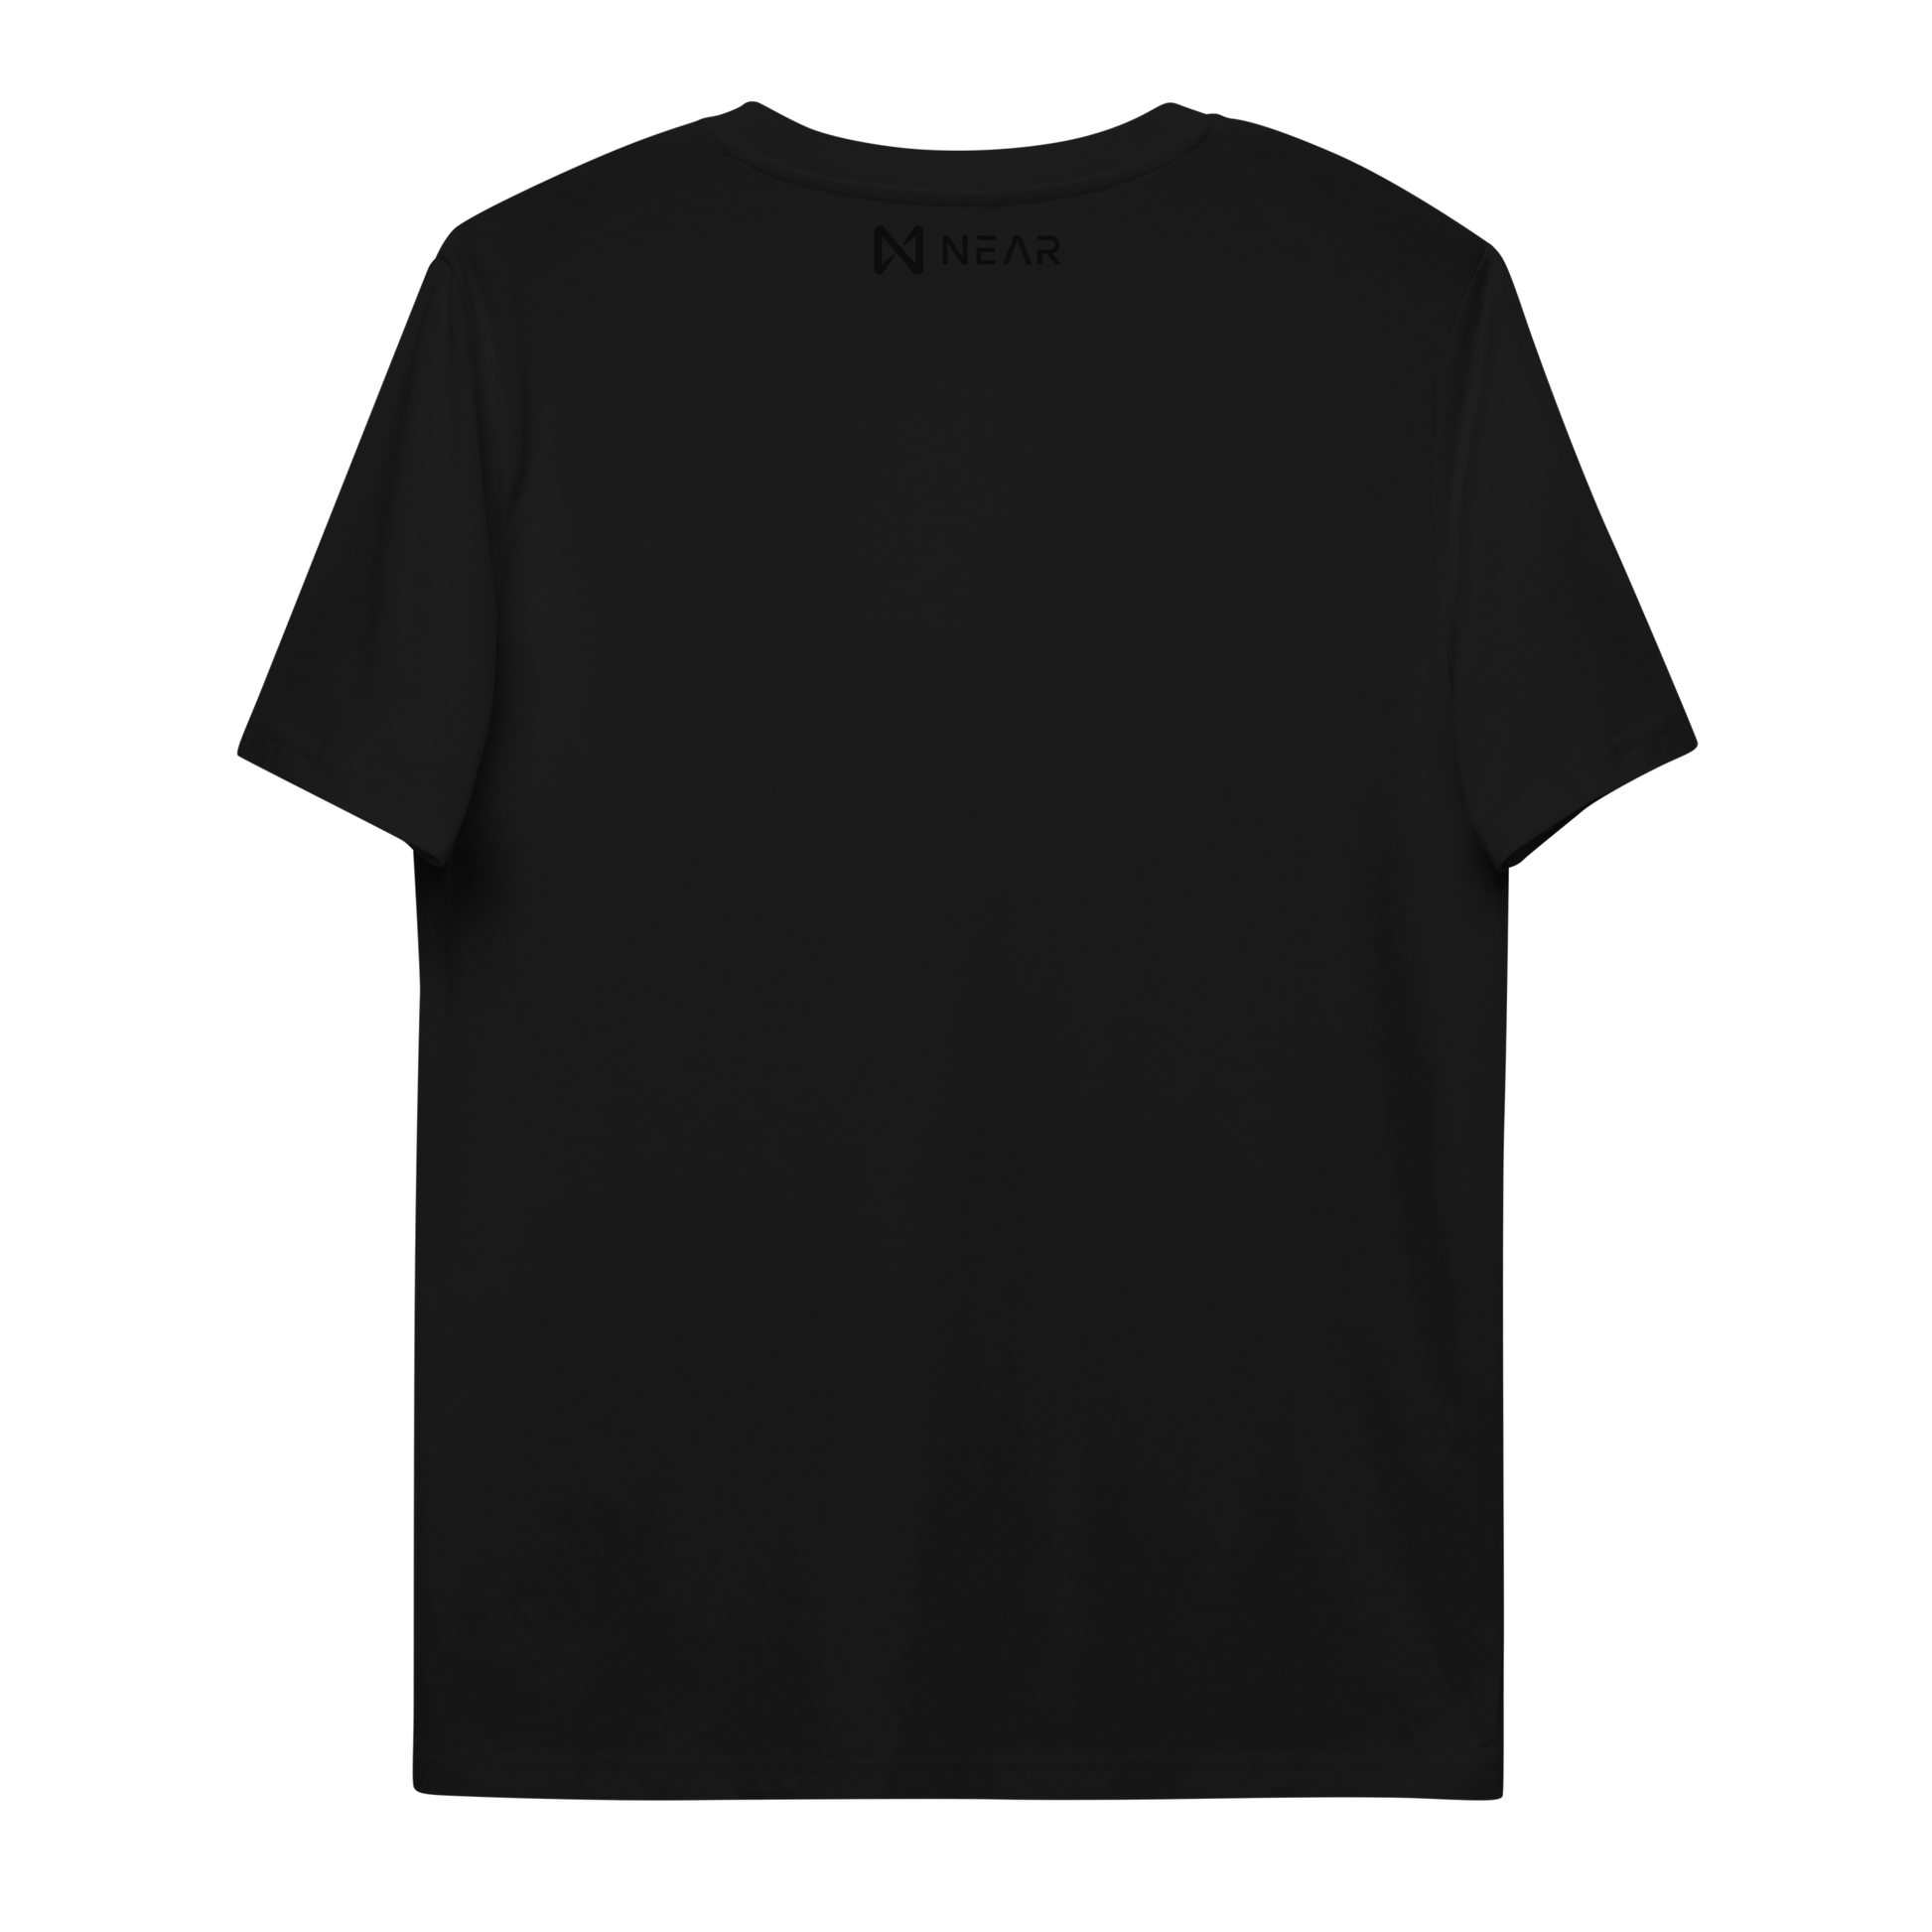 NEAR Core T-shirt—Black Logo –